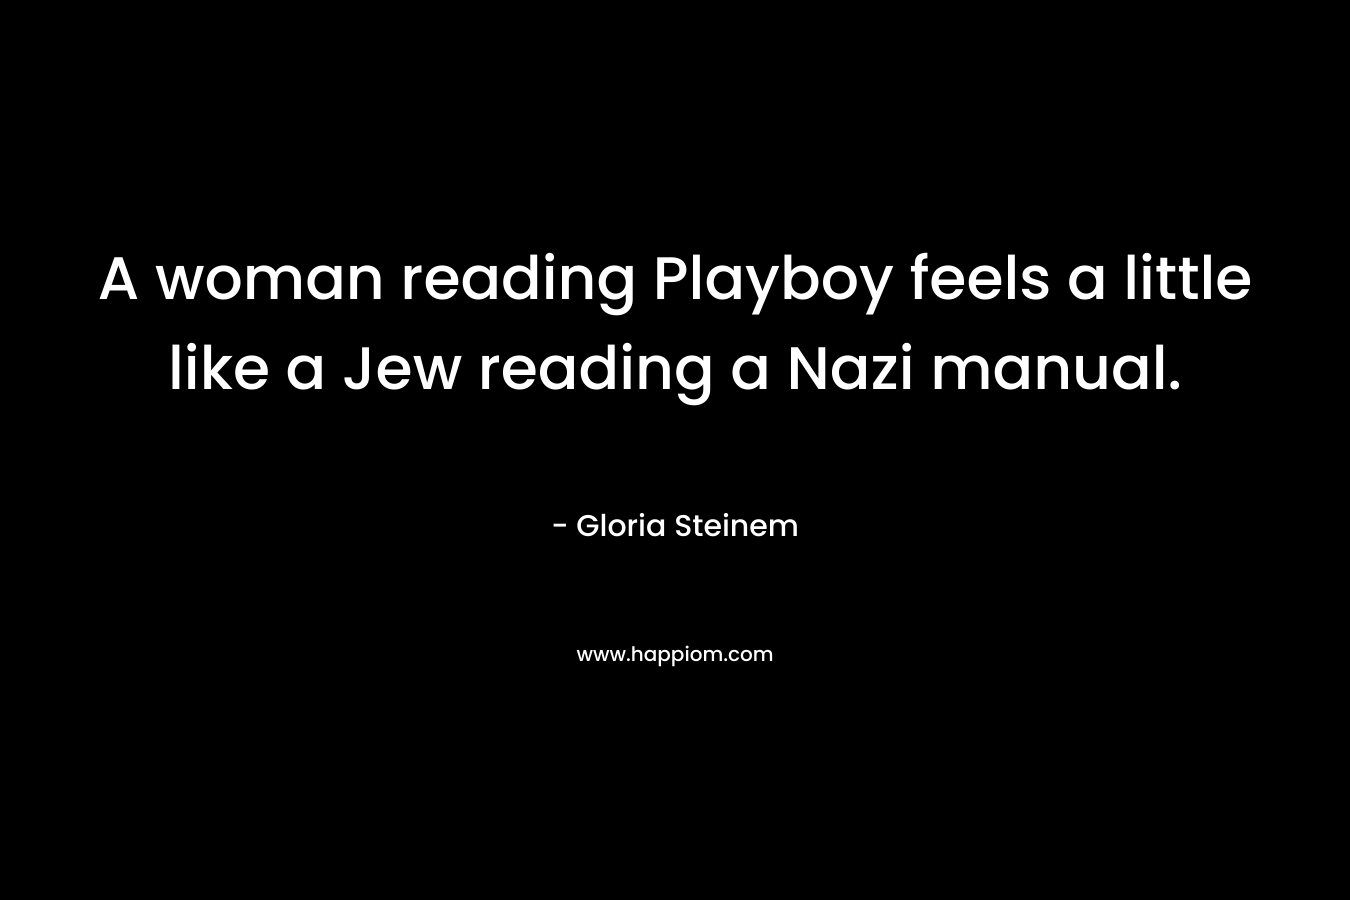 A woman reading Playboy feels a little like a Jew reading a Nazi manual. – Gloria Steinem